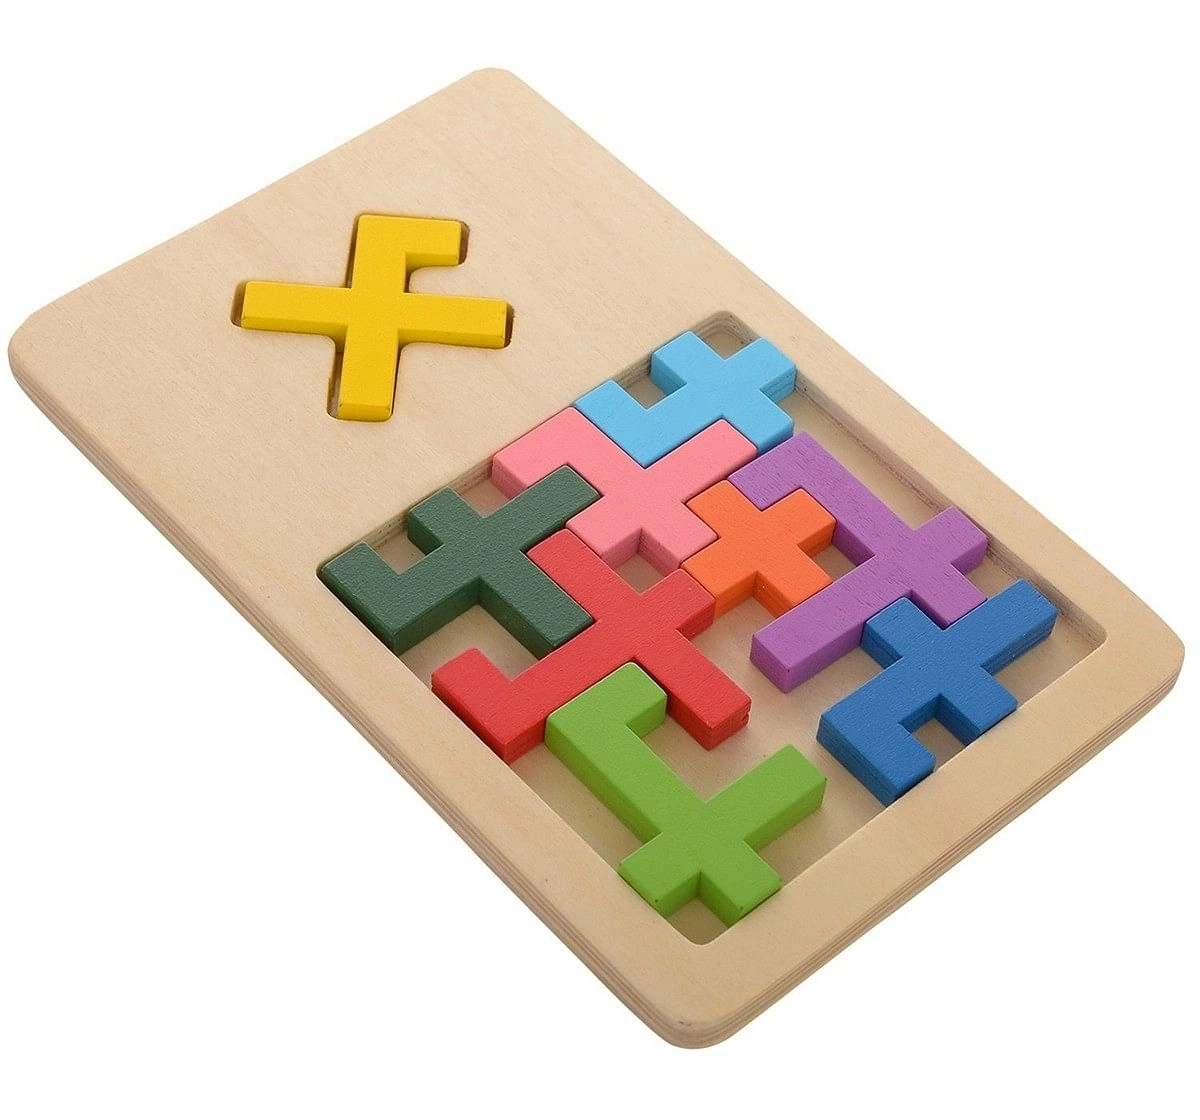 Mi Wooden Reunion Puzzle, Multi Color Games for Kids age 6Y+ 